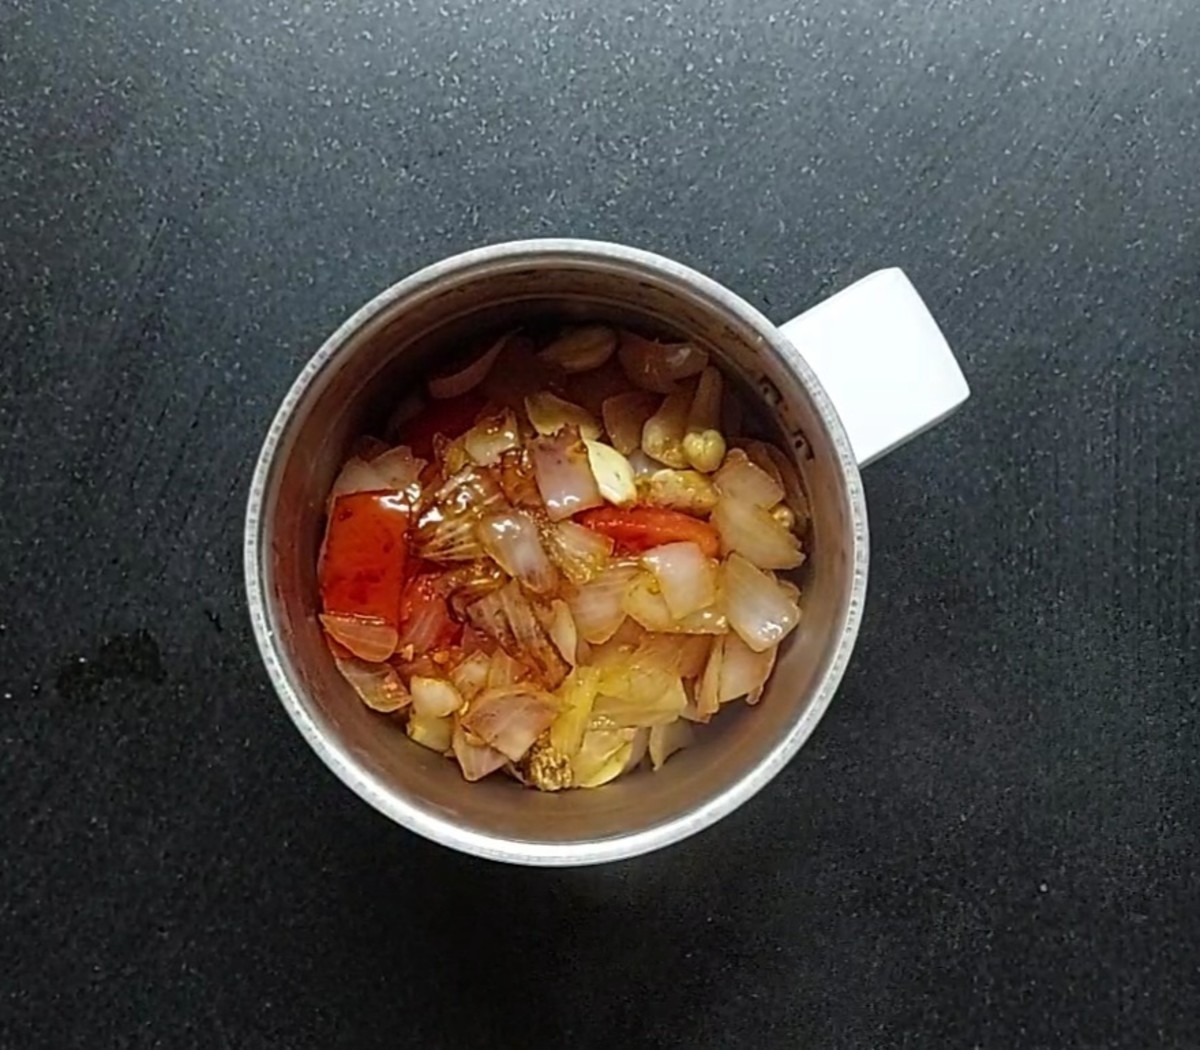 Transfer the onion-tomato mixture to the mixer jar.